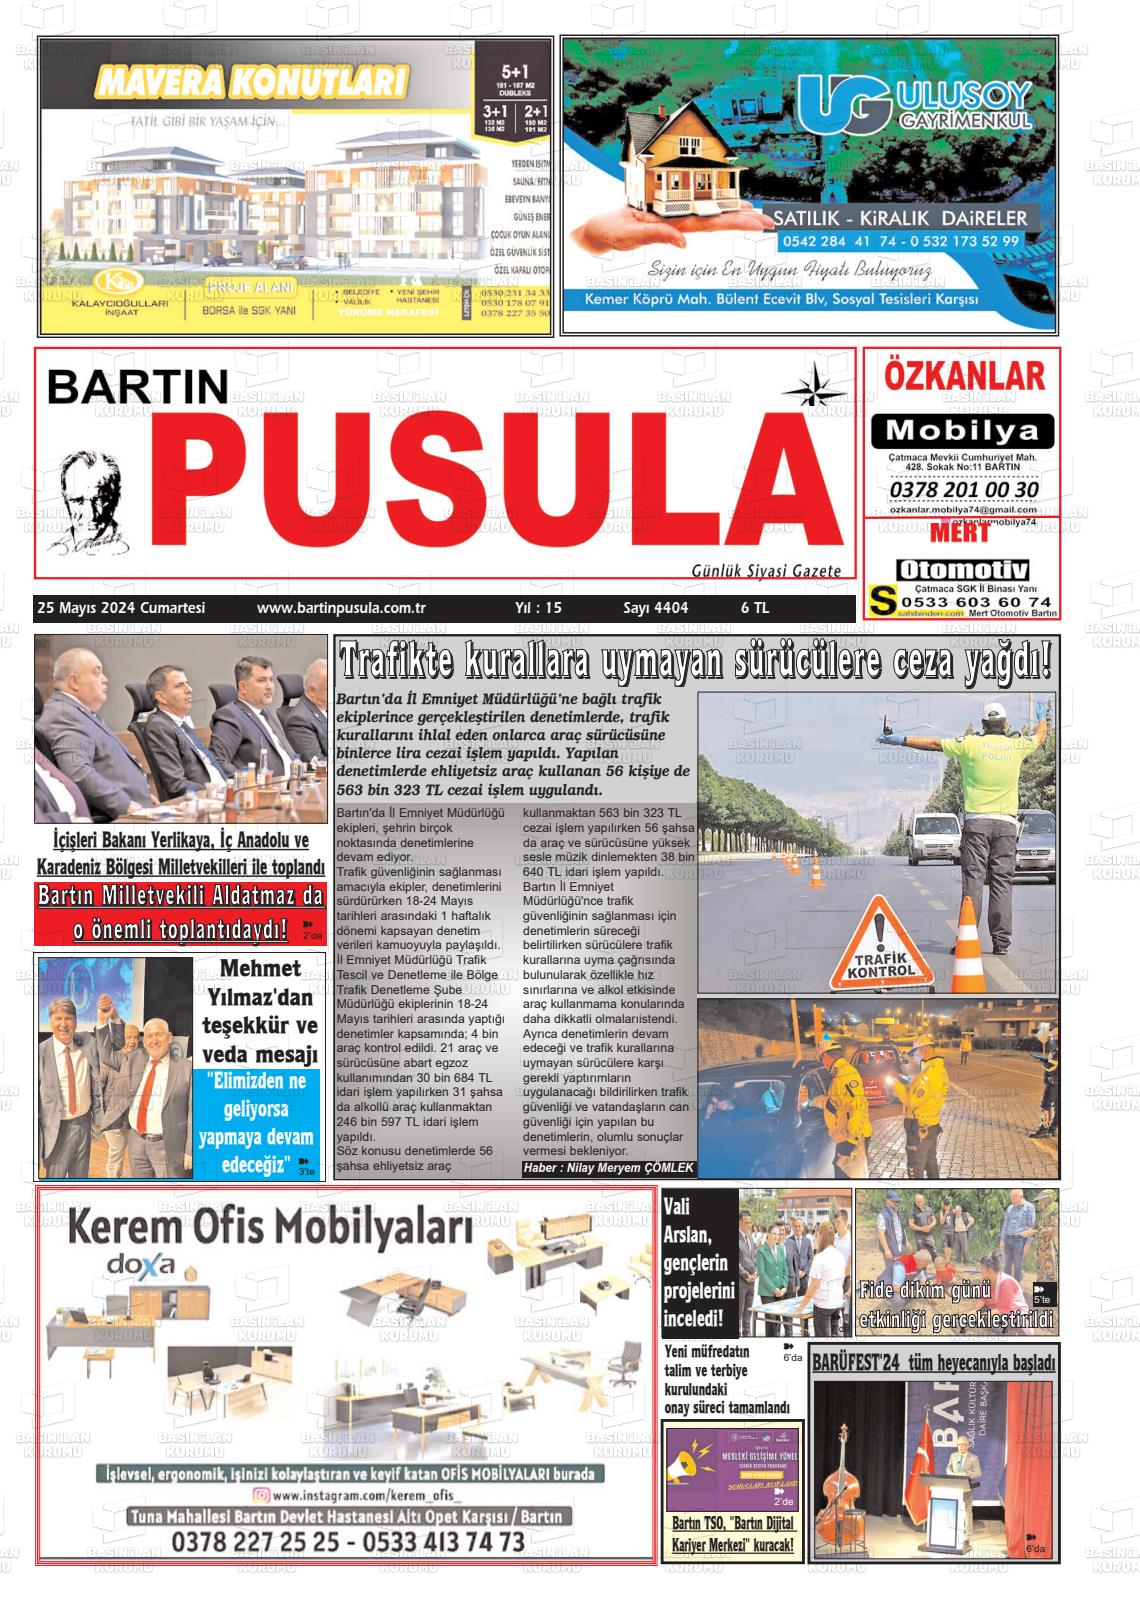 BARTIN PUSULA Gazetesi